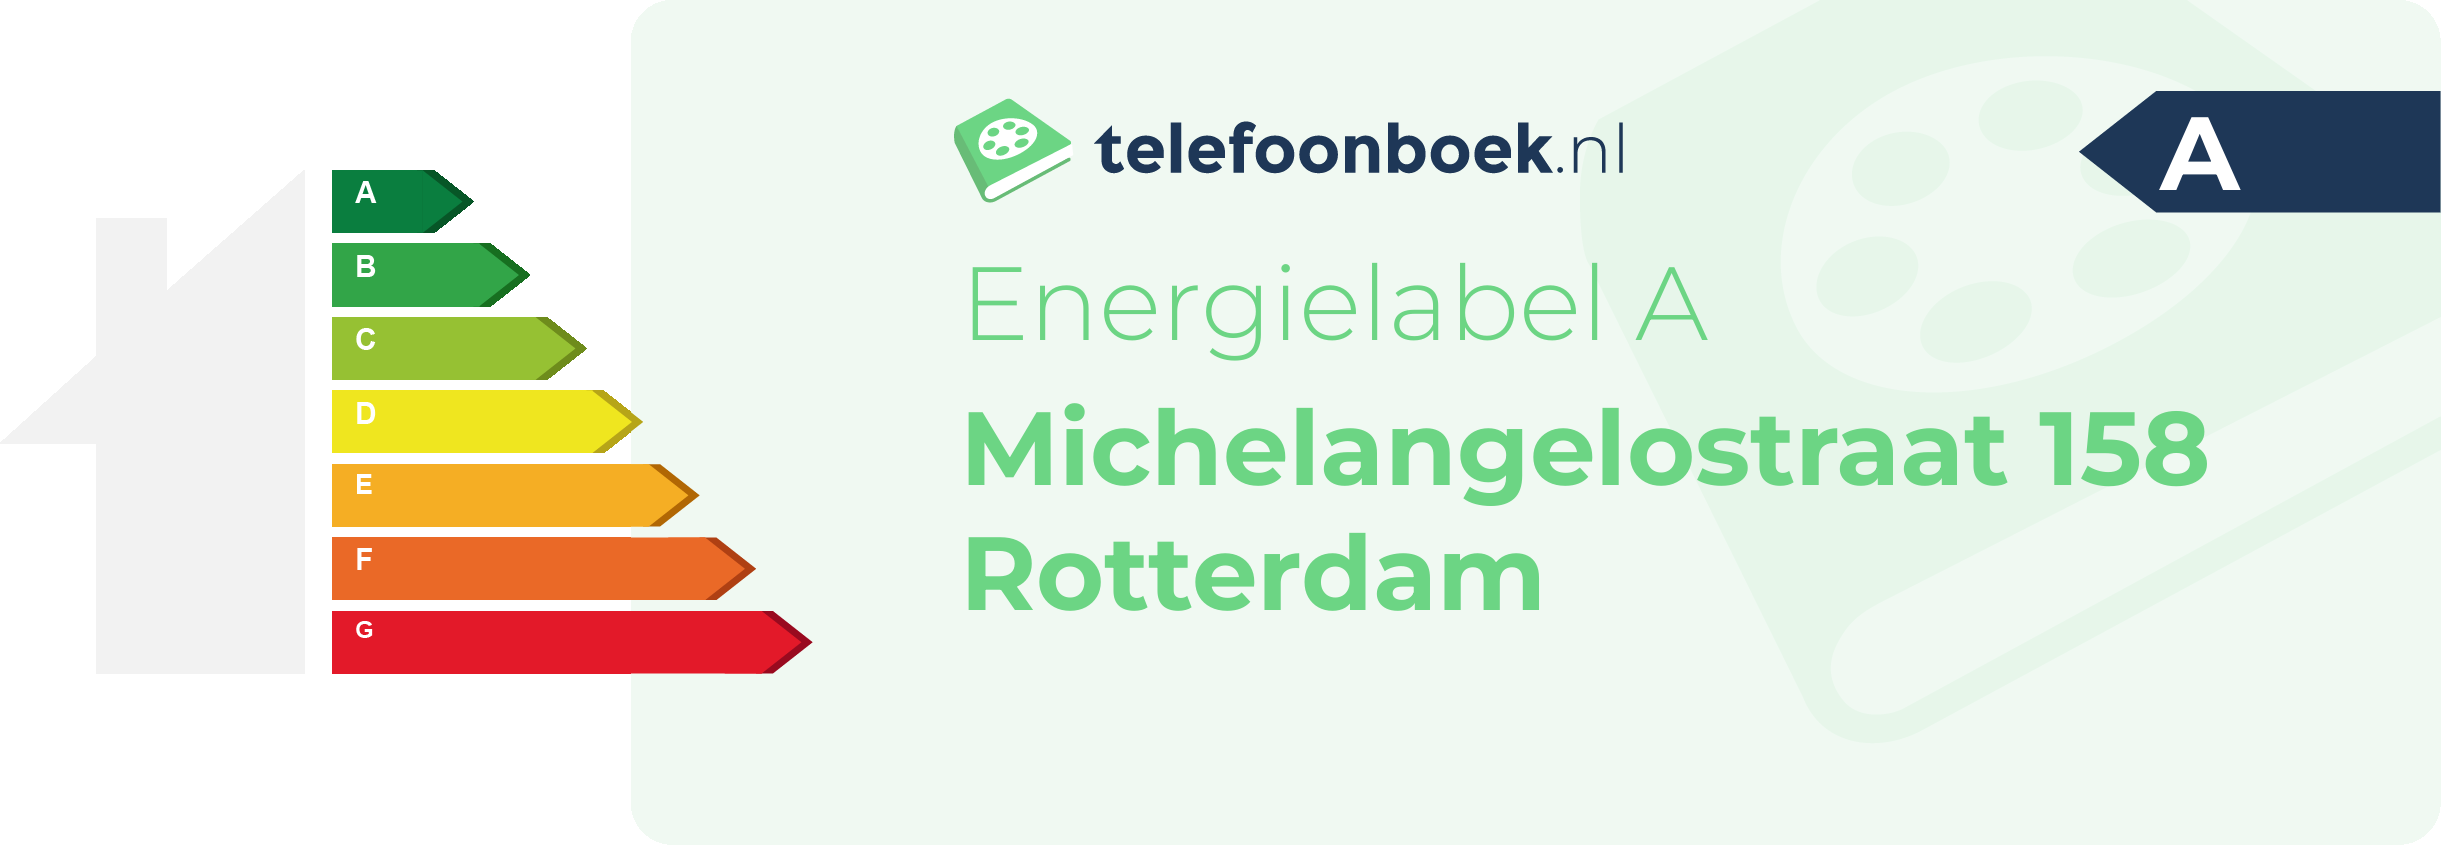 Energielabel Michelangelostraat 158 Rotterdam